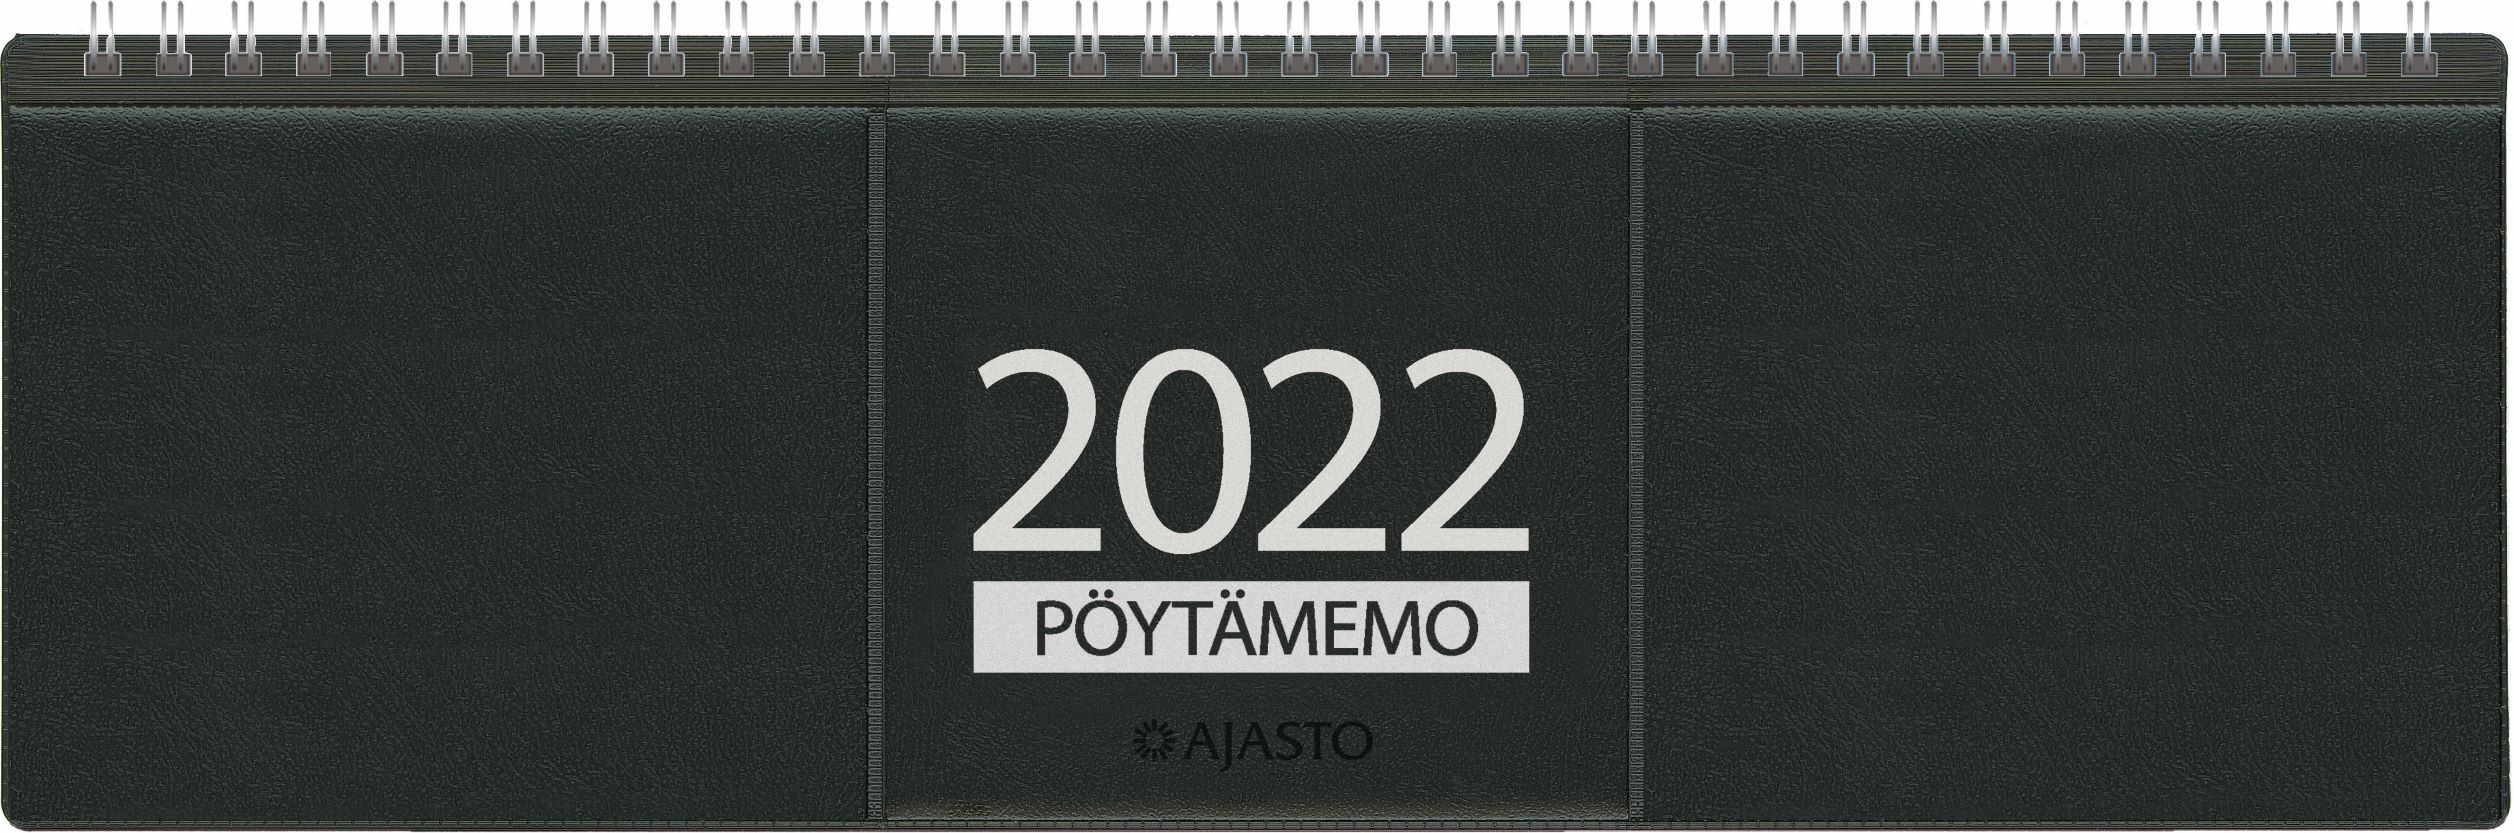 Pöytämemo 2022